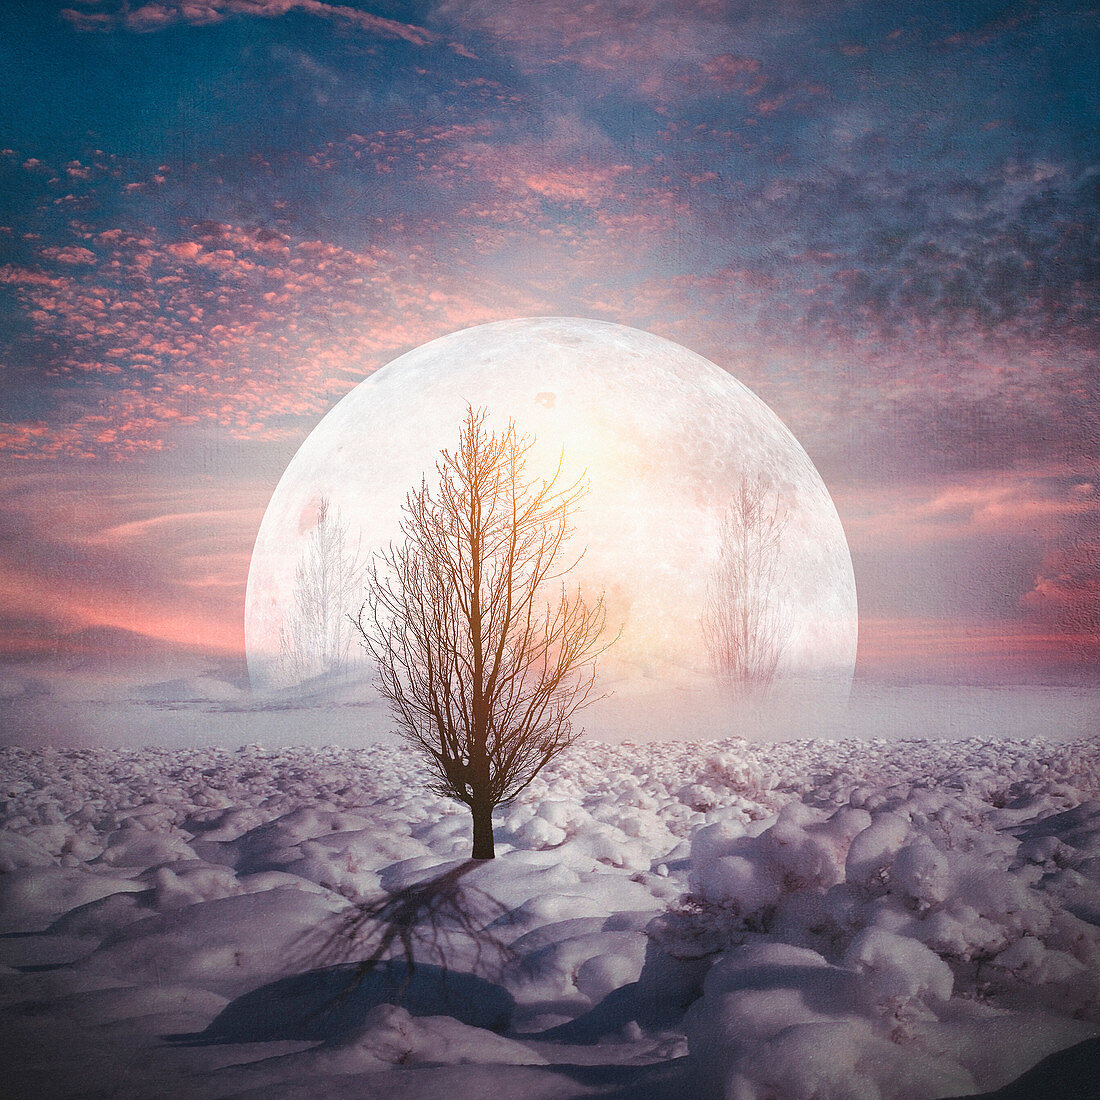 Moon in a snowy landscape, illustration